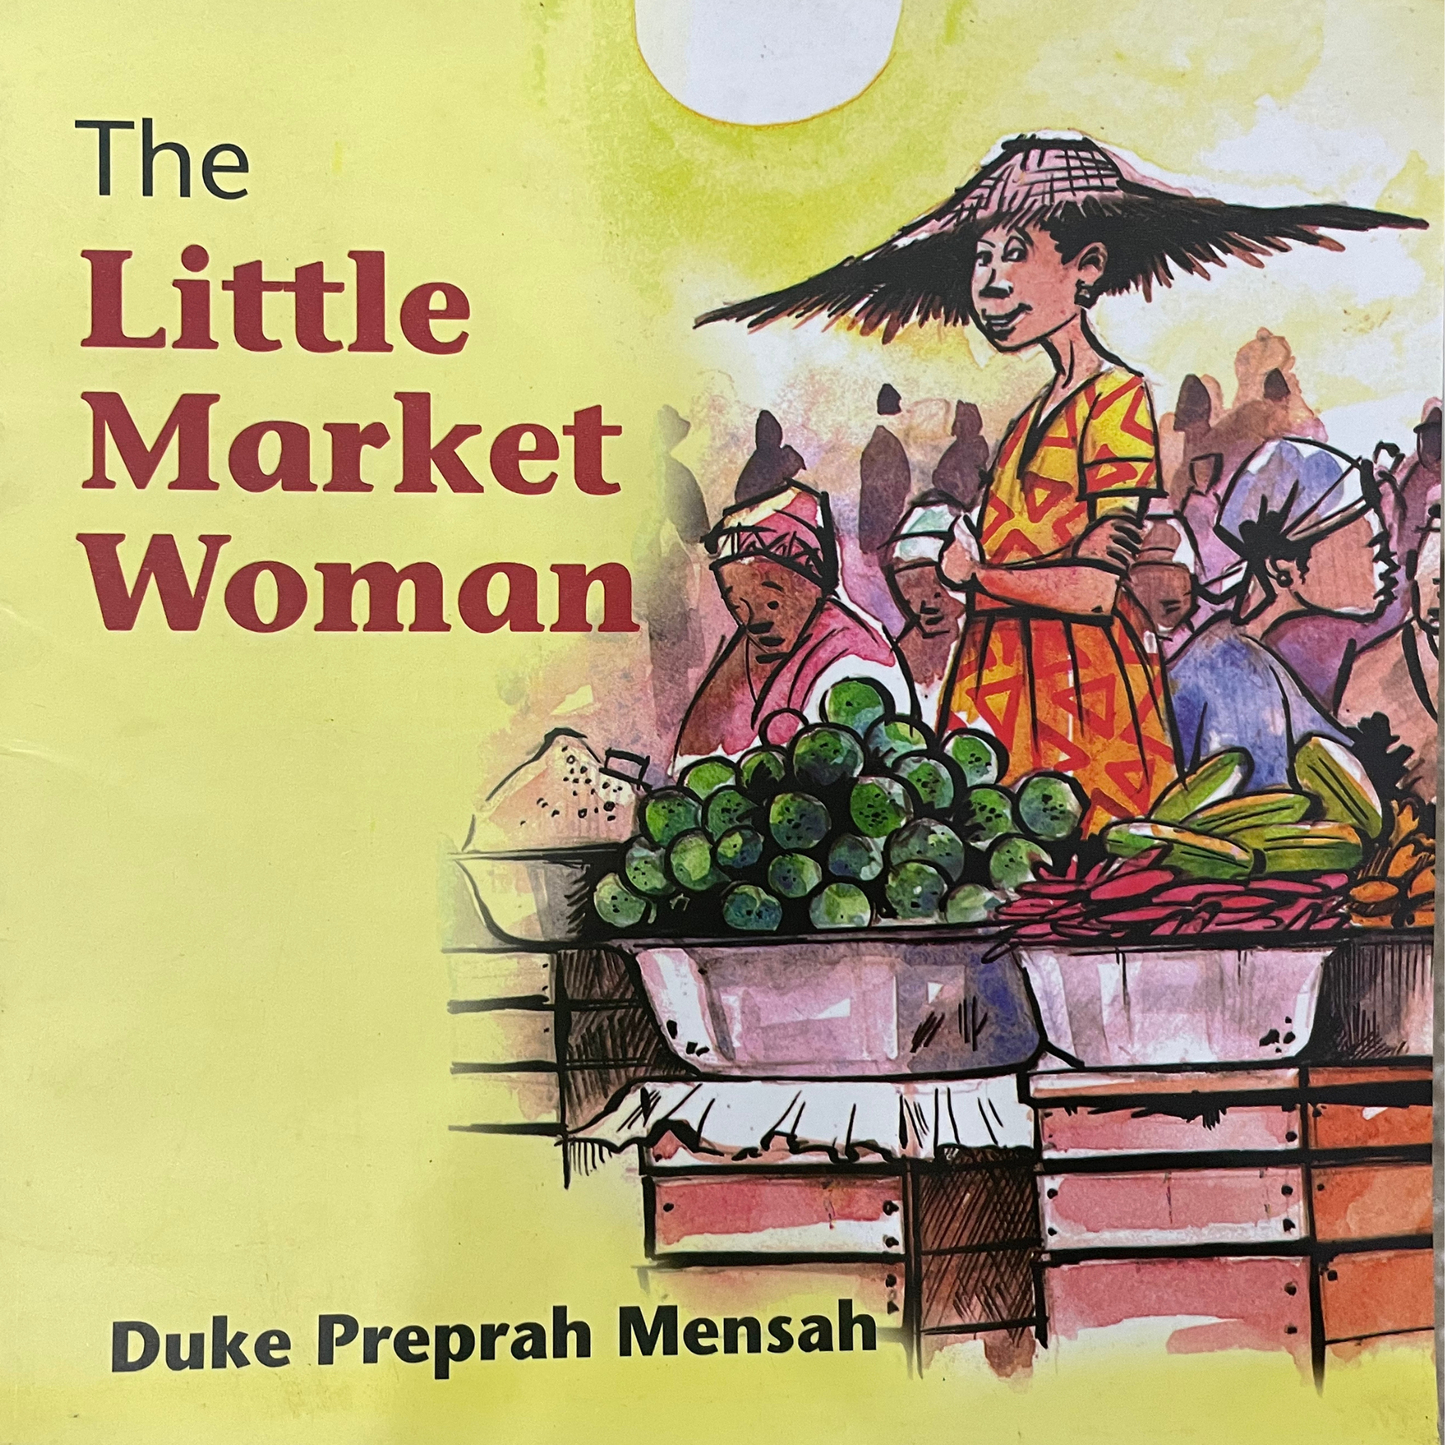 The little market woman